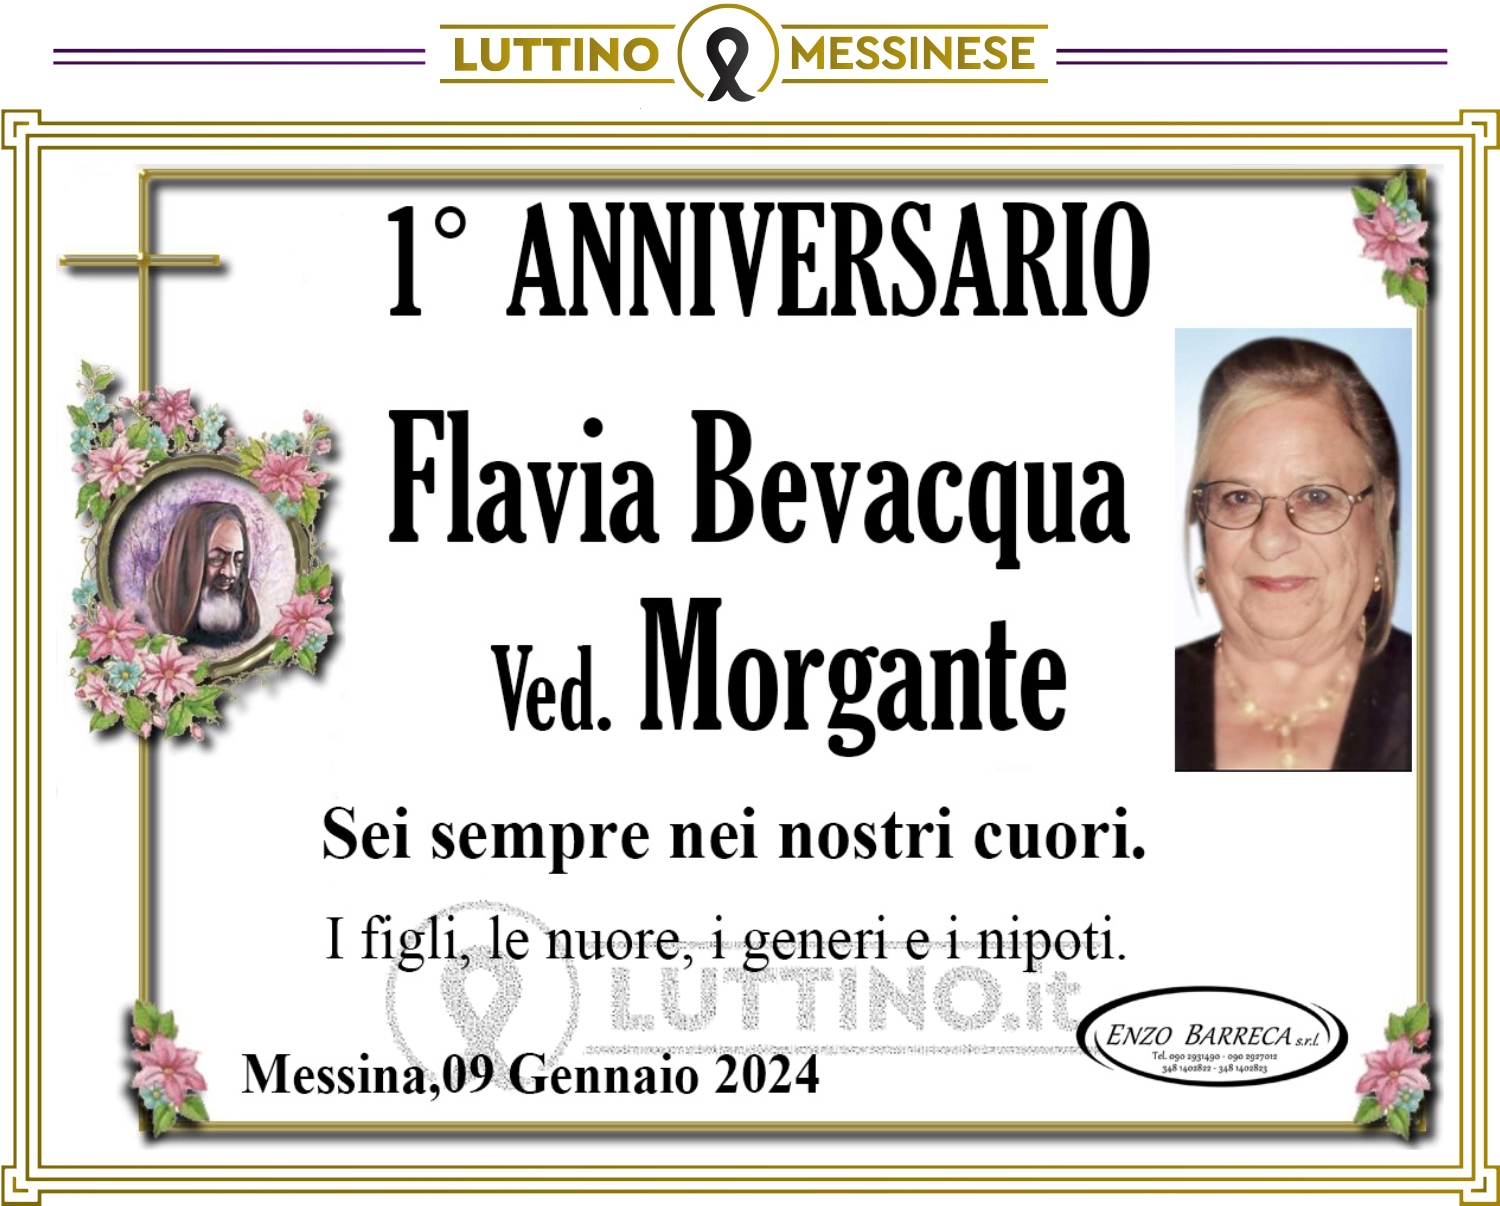 Flavia Bevacqua